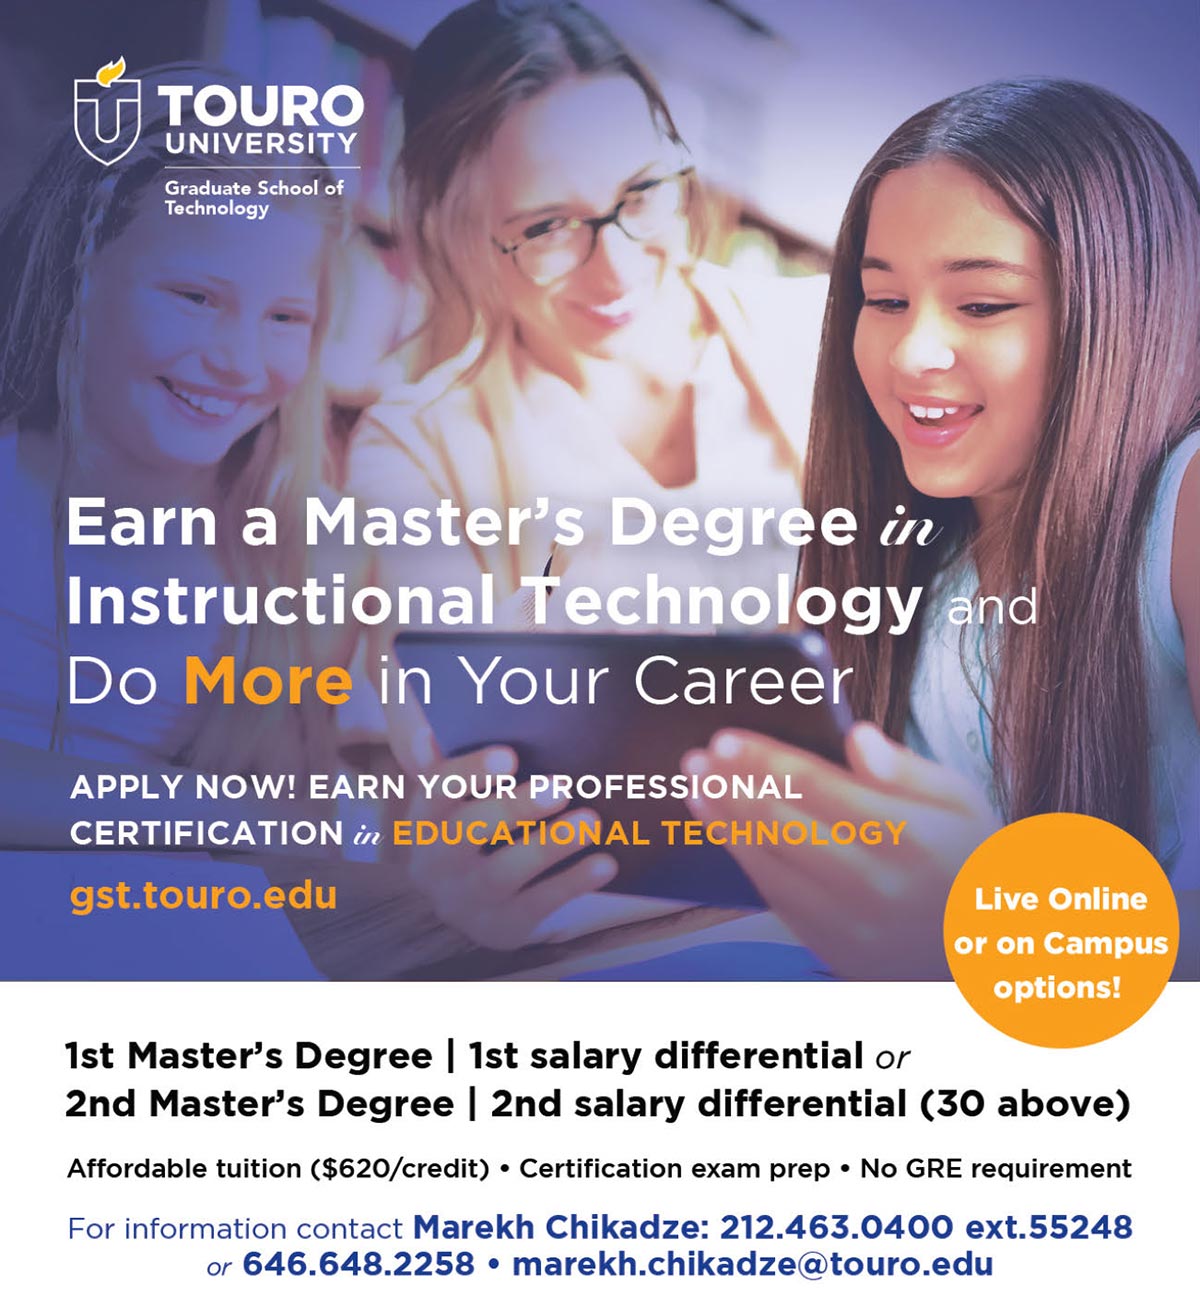 Touro University Graduate School of Technology Advertisement